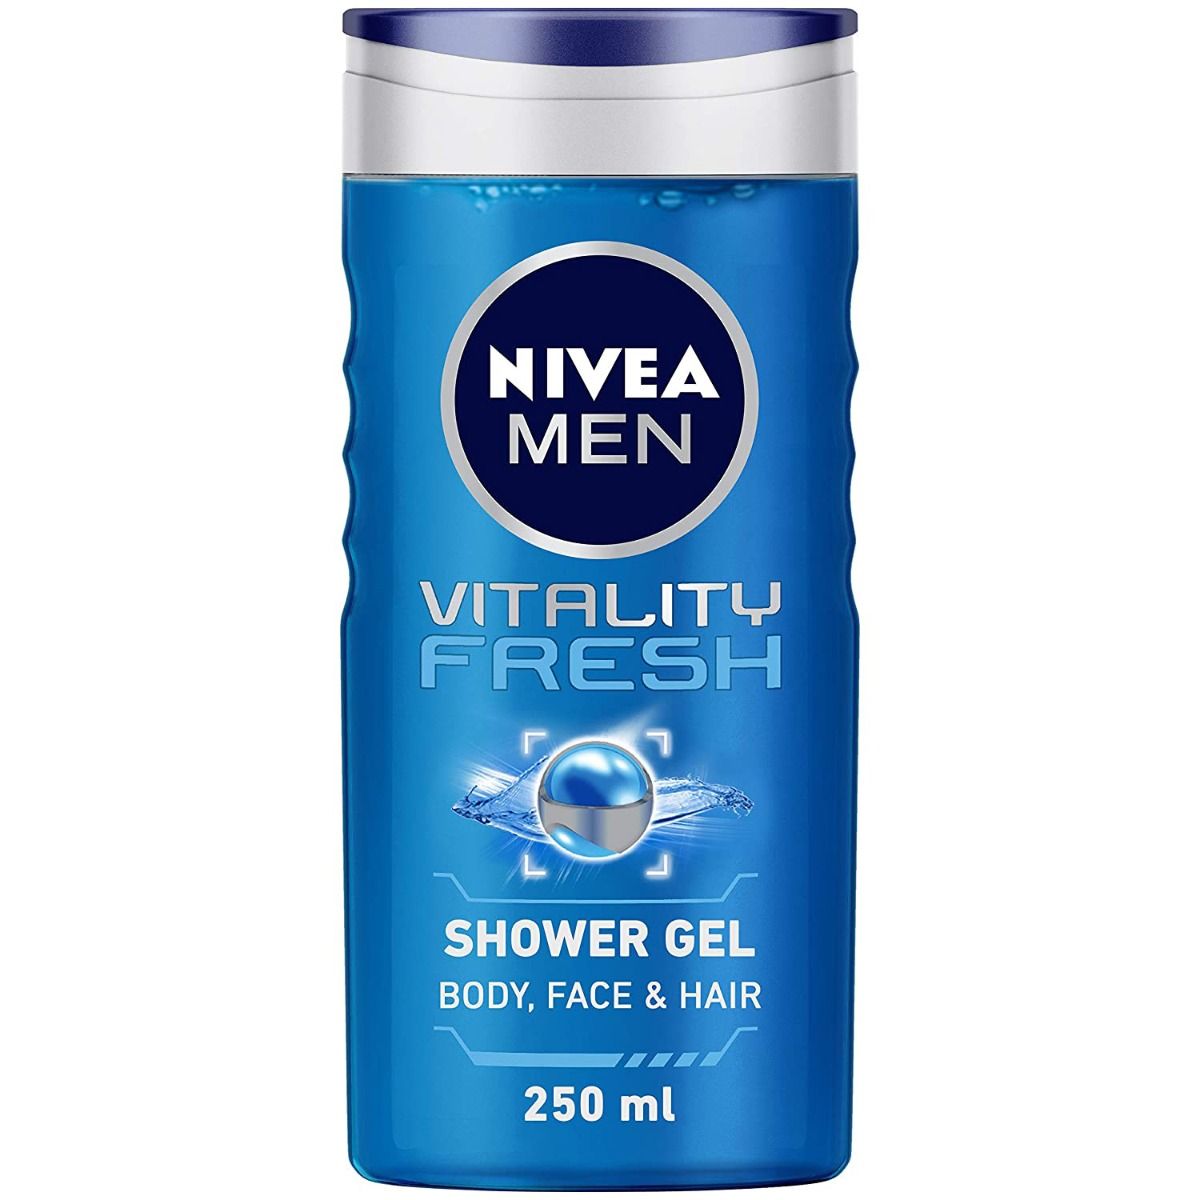 Nivea Men Fresh Body Wash, 250 ml Price, Uses, Side Effects, Composition - Apollo Pharmacy